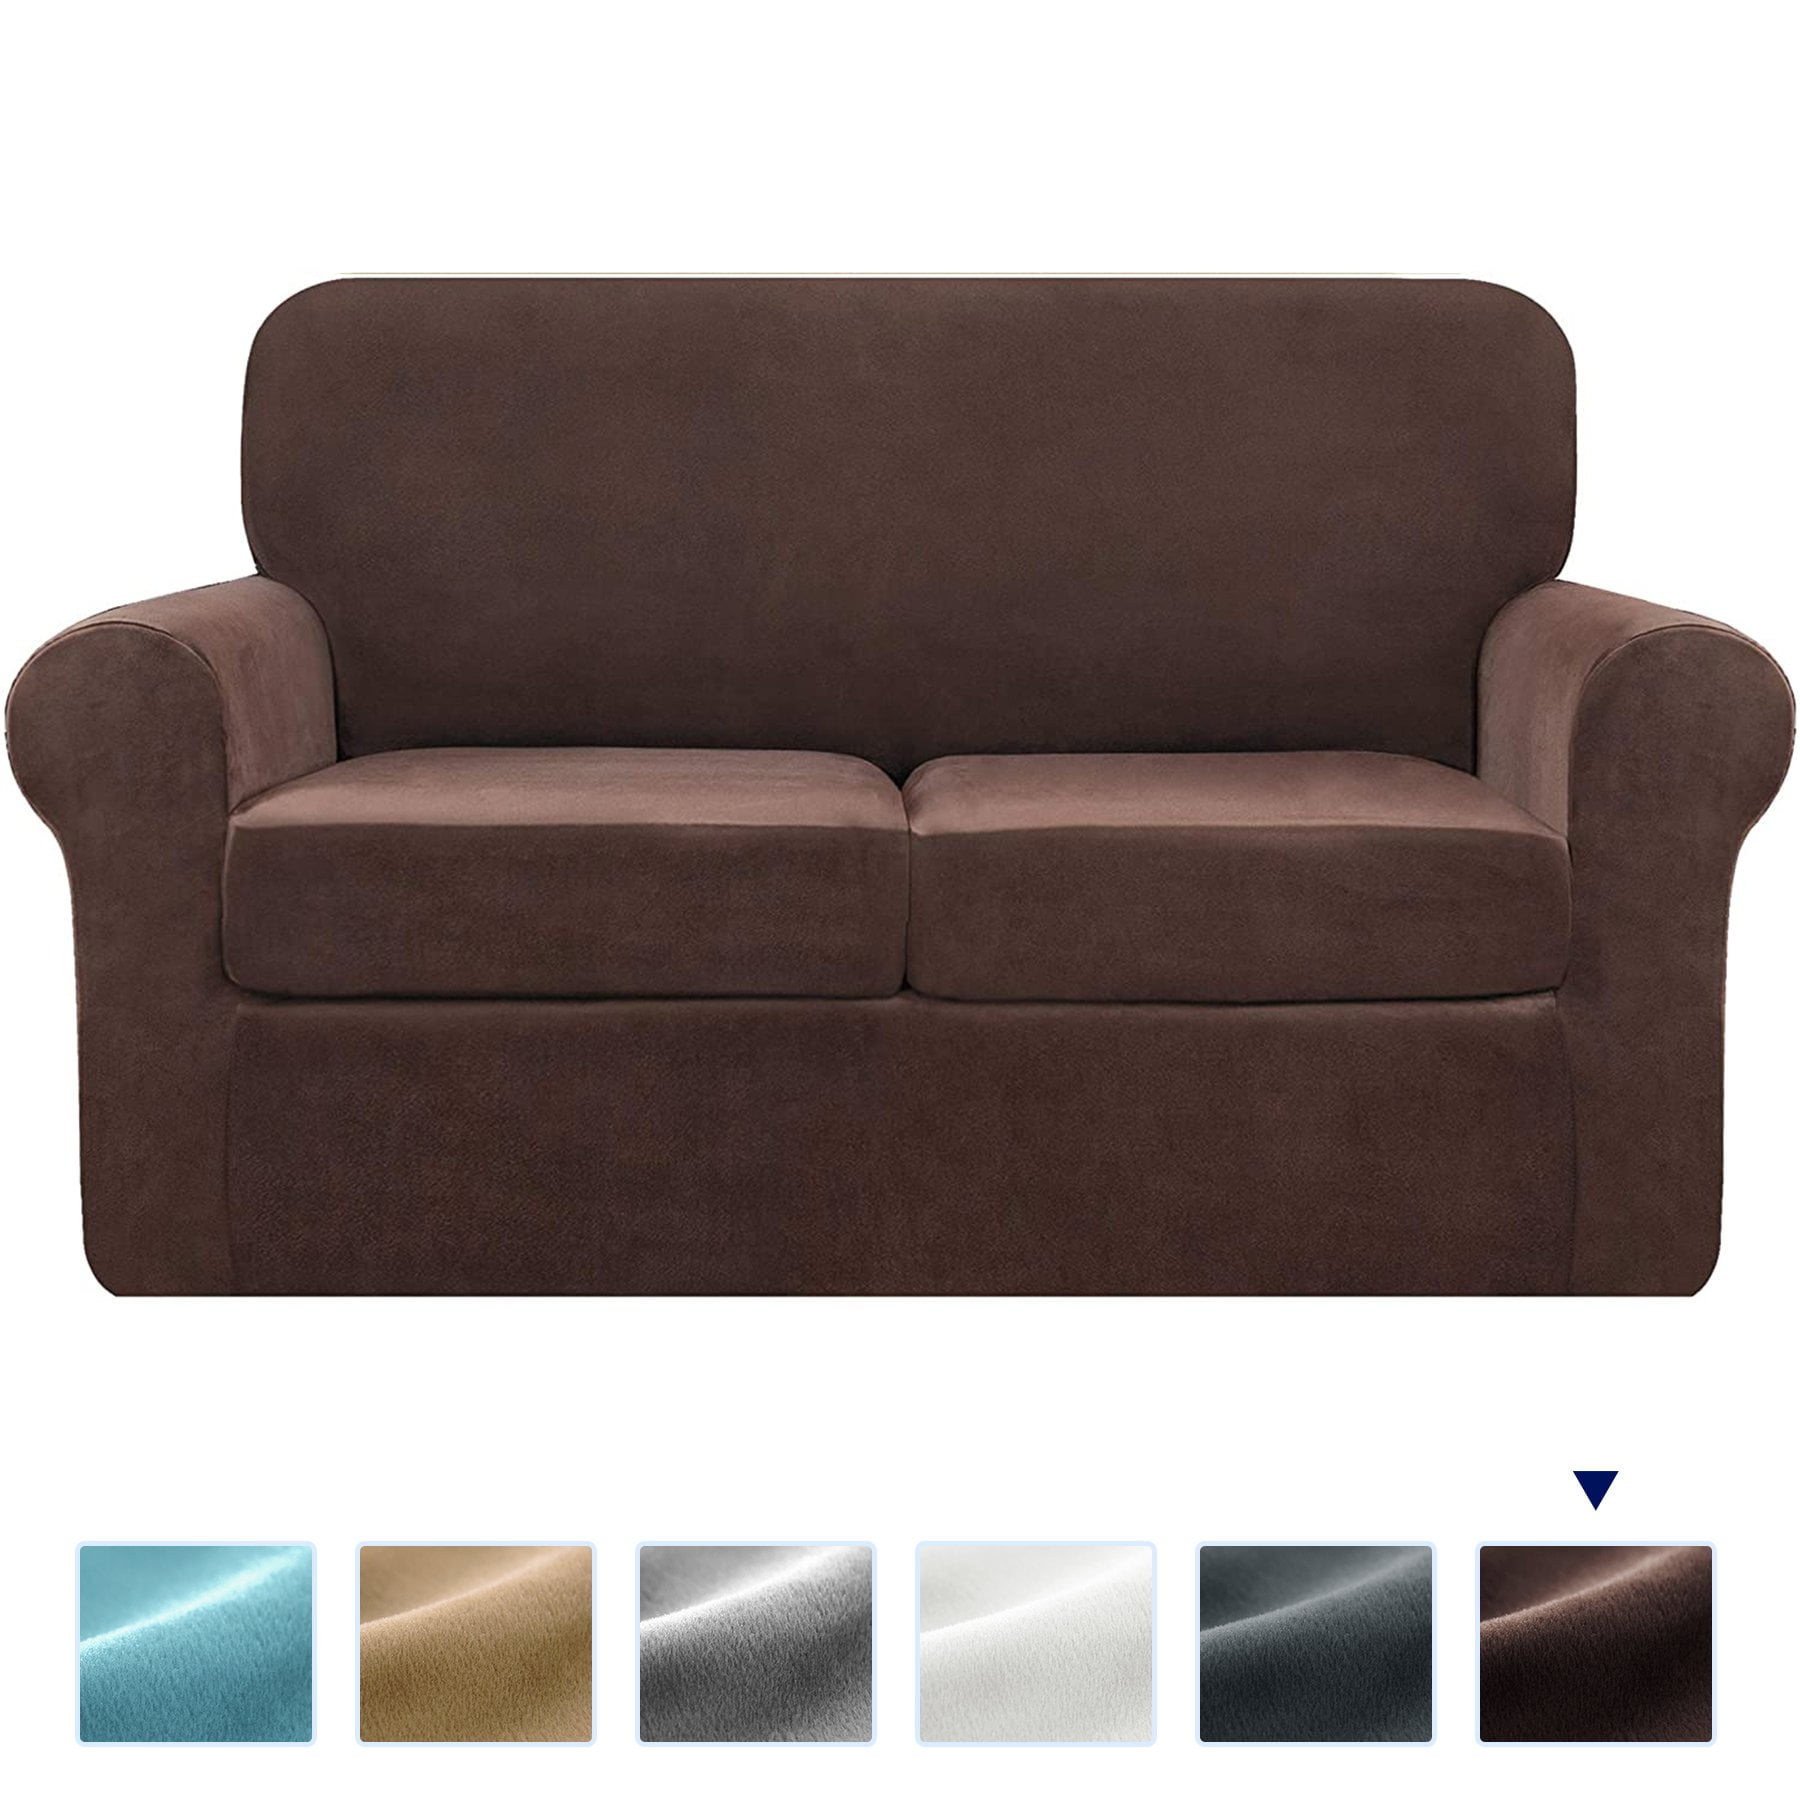 Chocolate Velvet Stretch Furniture Chair Sofa Loveseat Cover Pet Kids Slipcover 